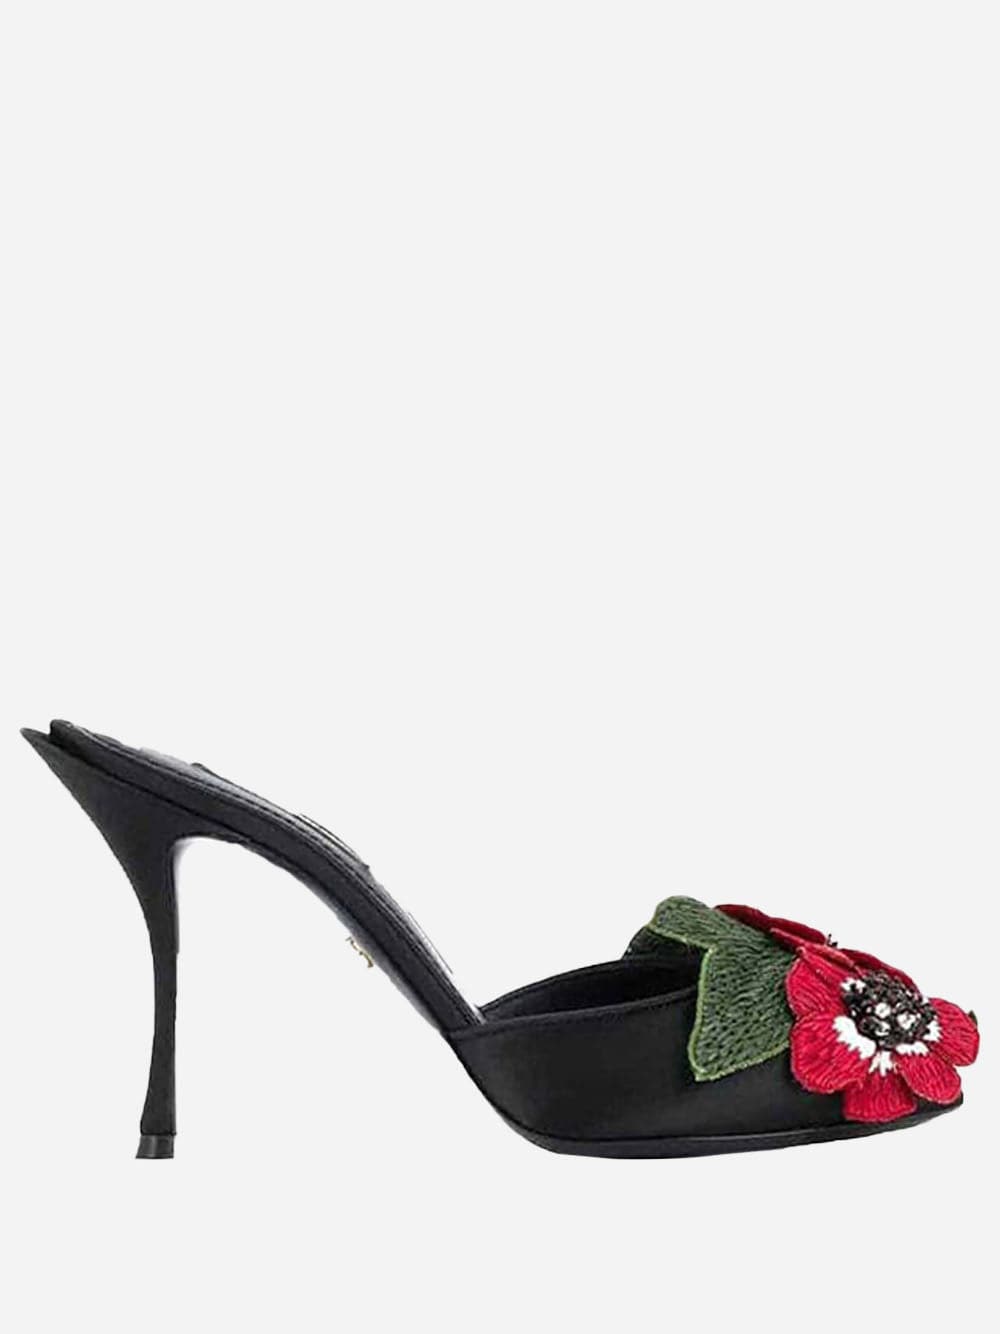 Dolce & Gabbana Embroidered-Flower Sandals